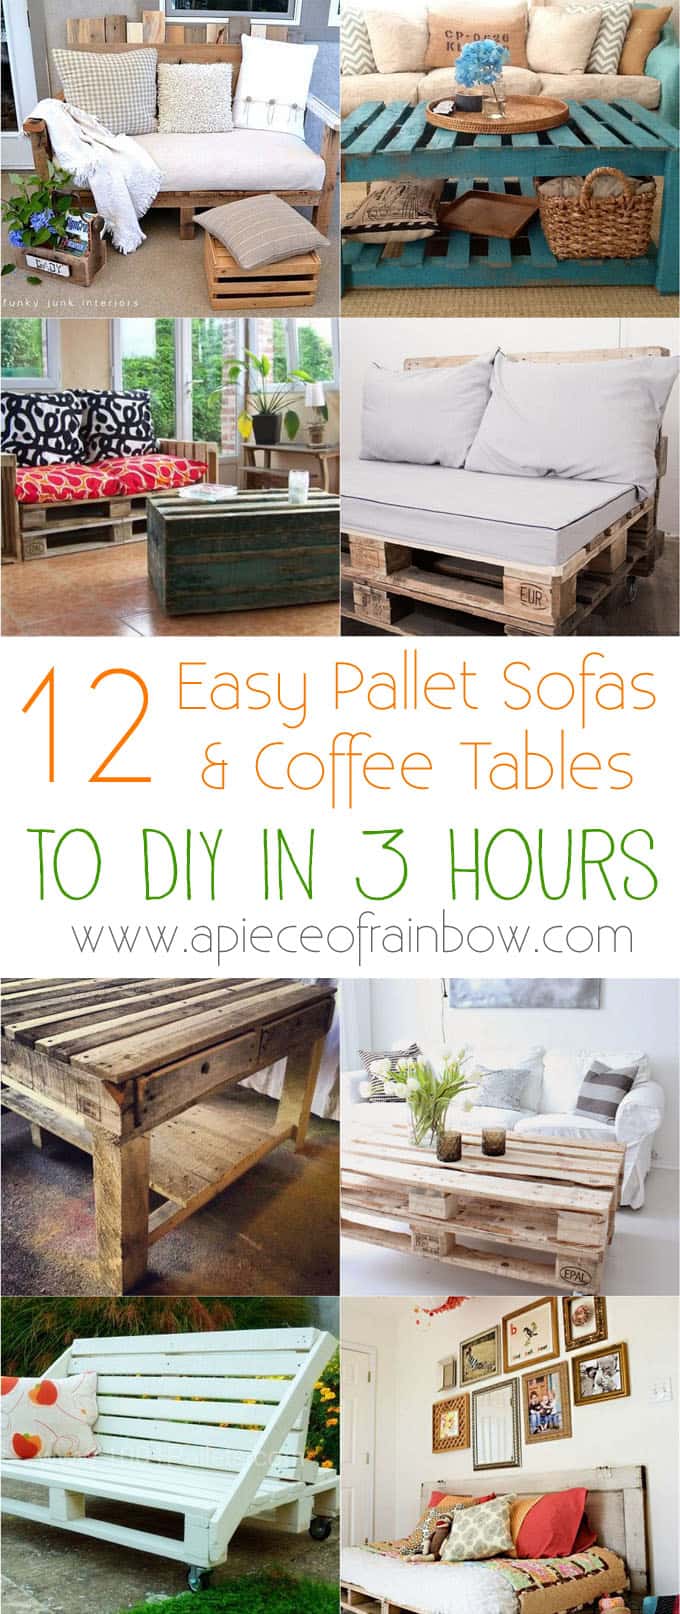 easy-DIY-pallet-sofa-coffee-table-apieceofrainbow (9)